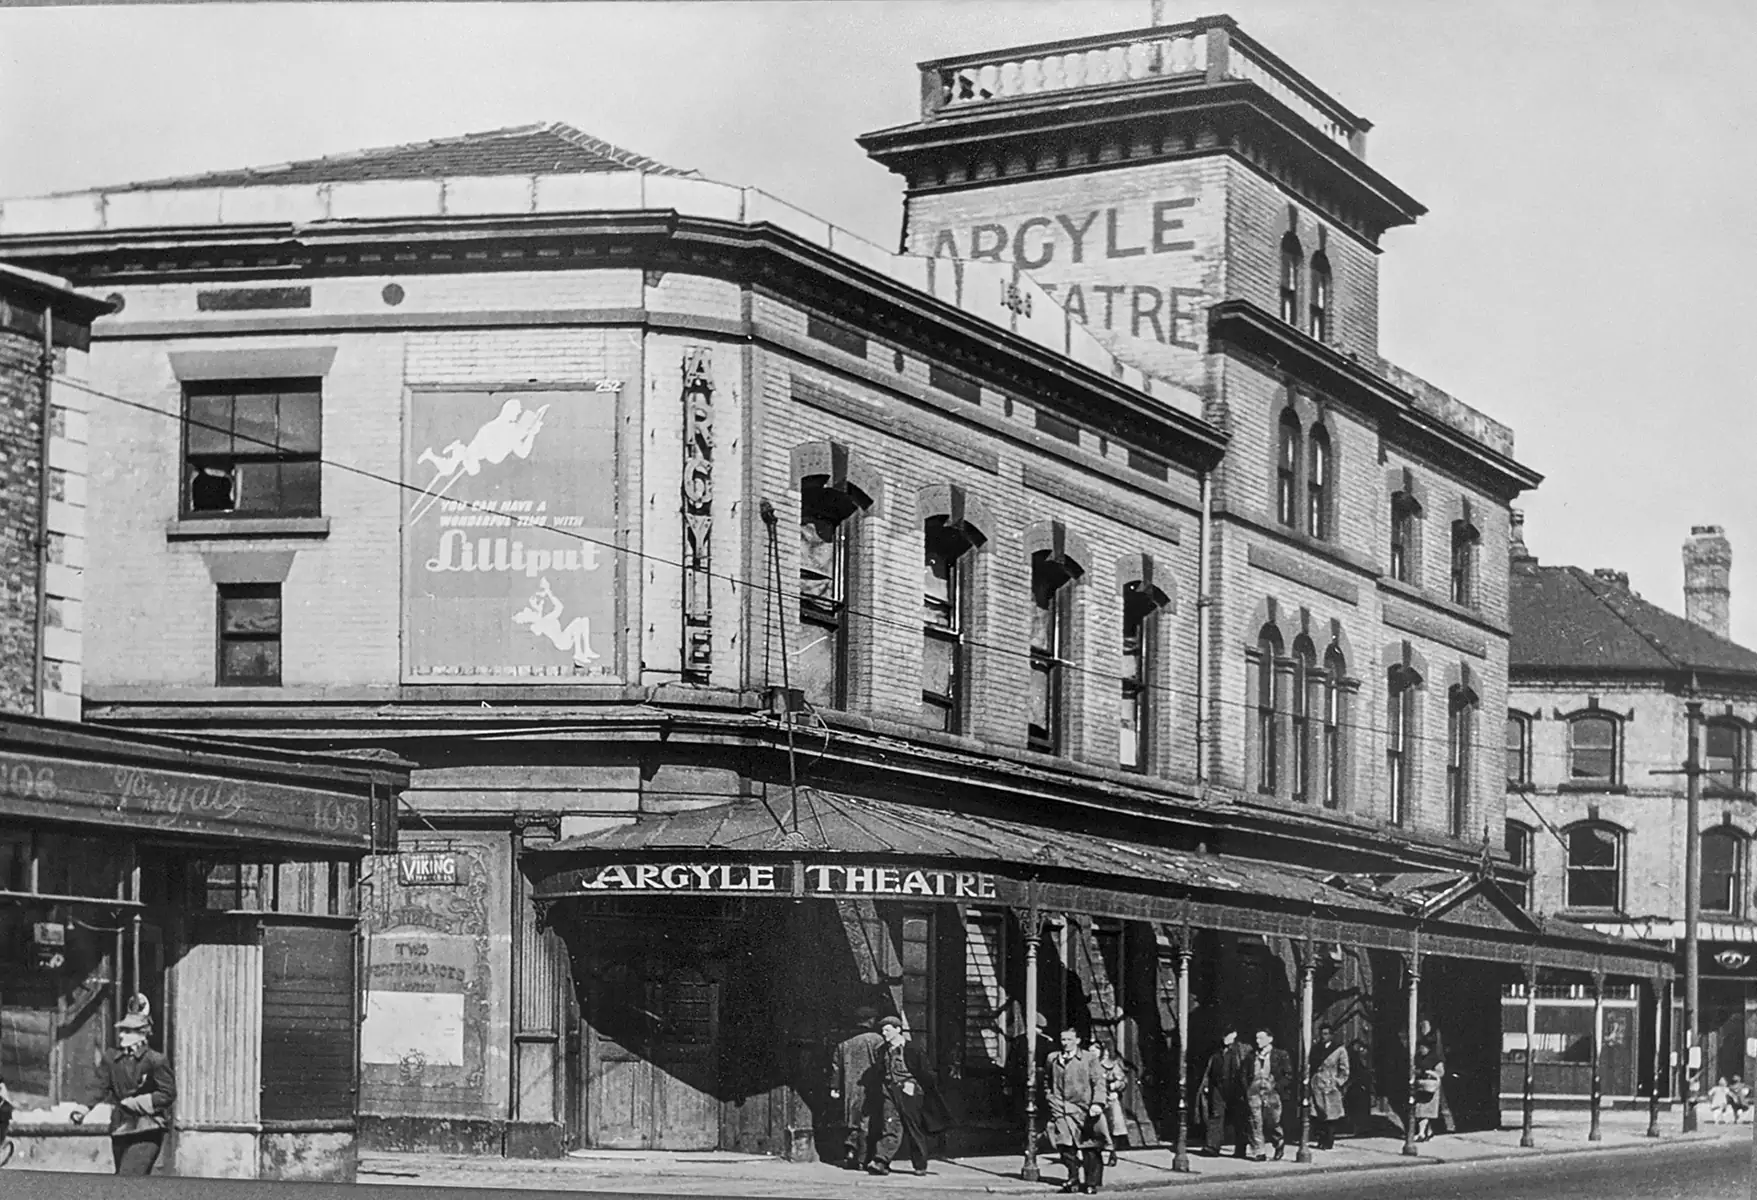 The Argyle theatre